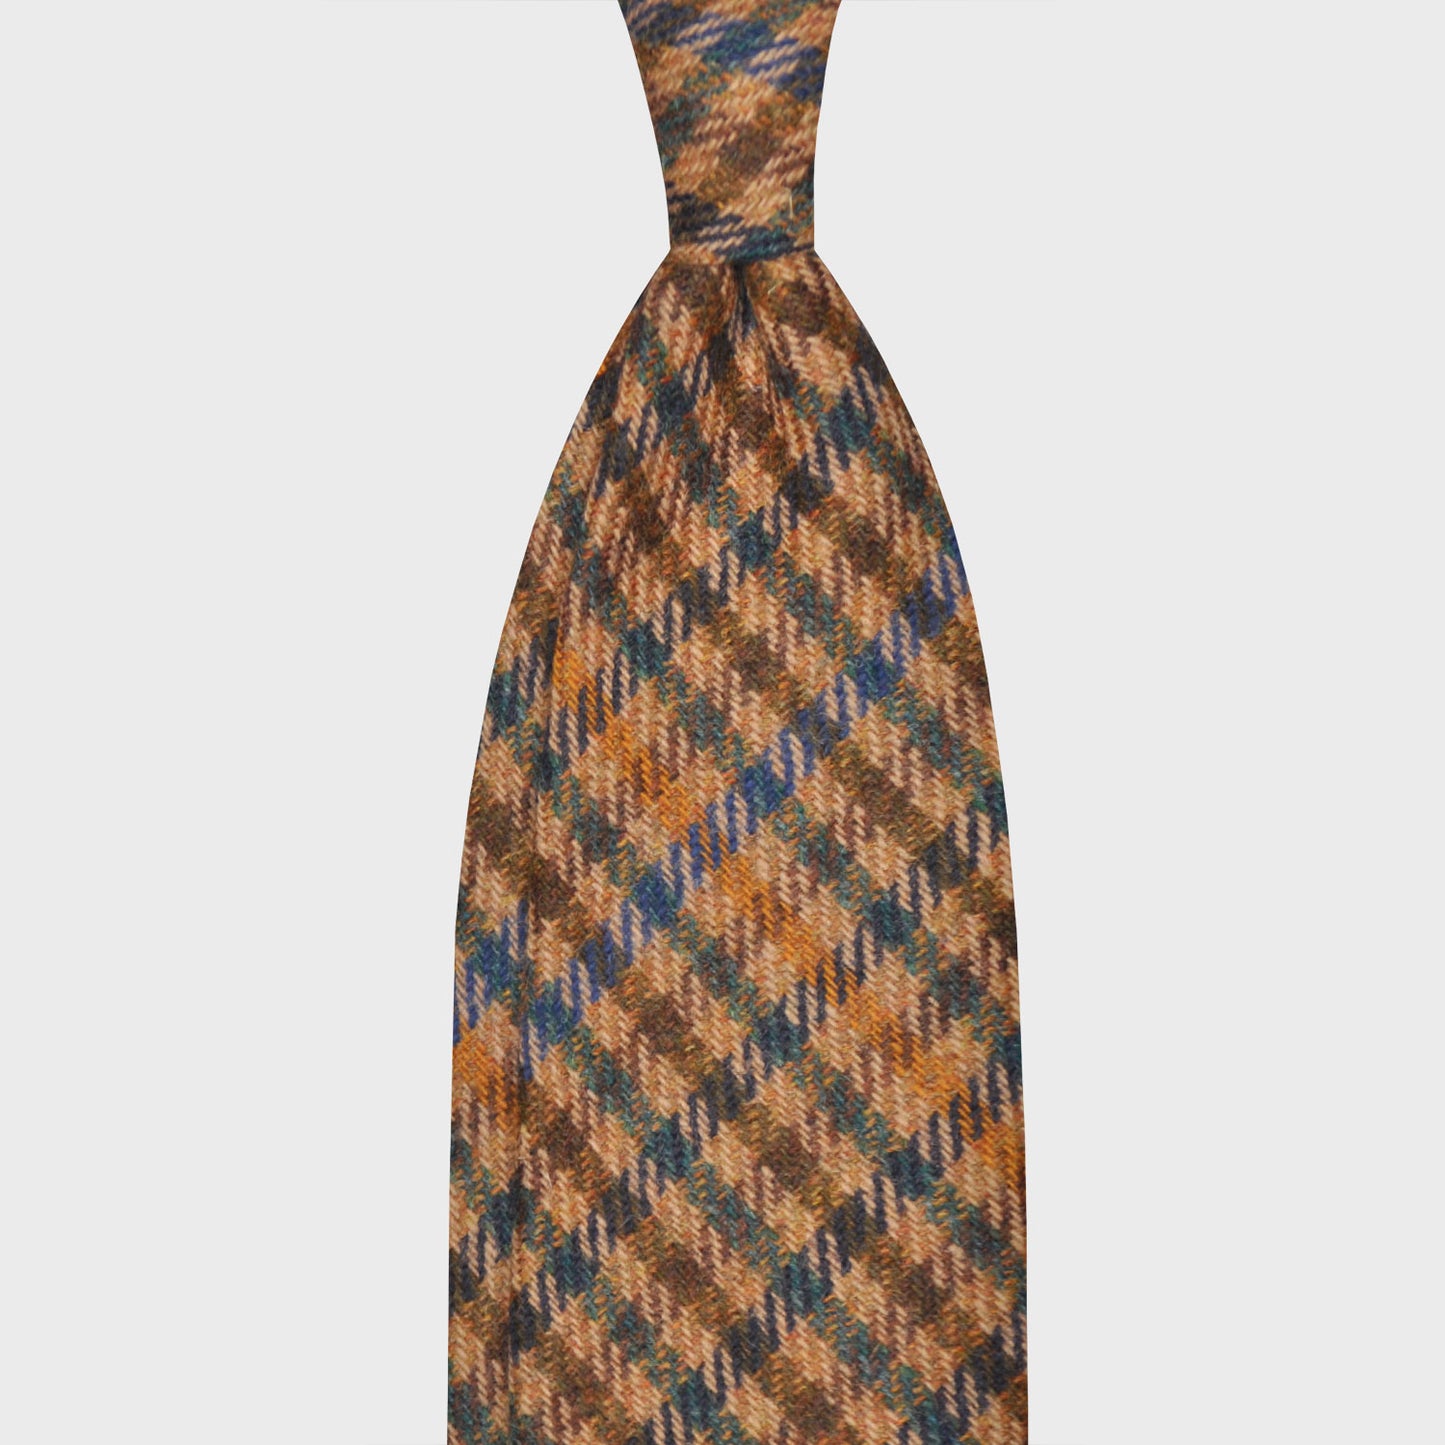 F.Marino Checks Tweed Tie 3 Folds Countryside-Wools Boutique Uomo